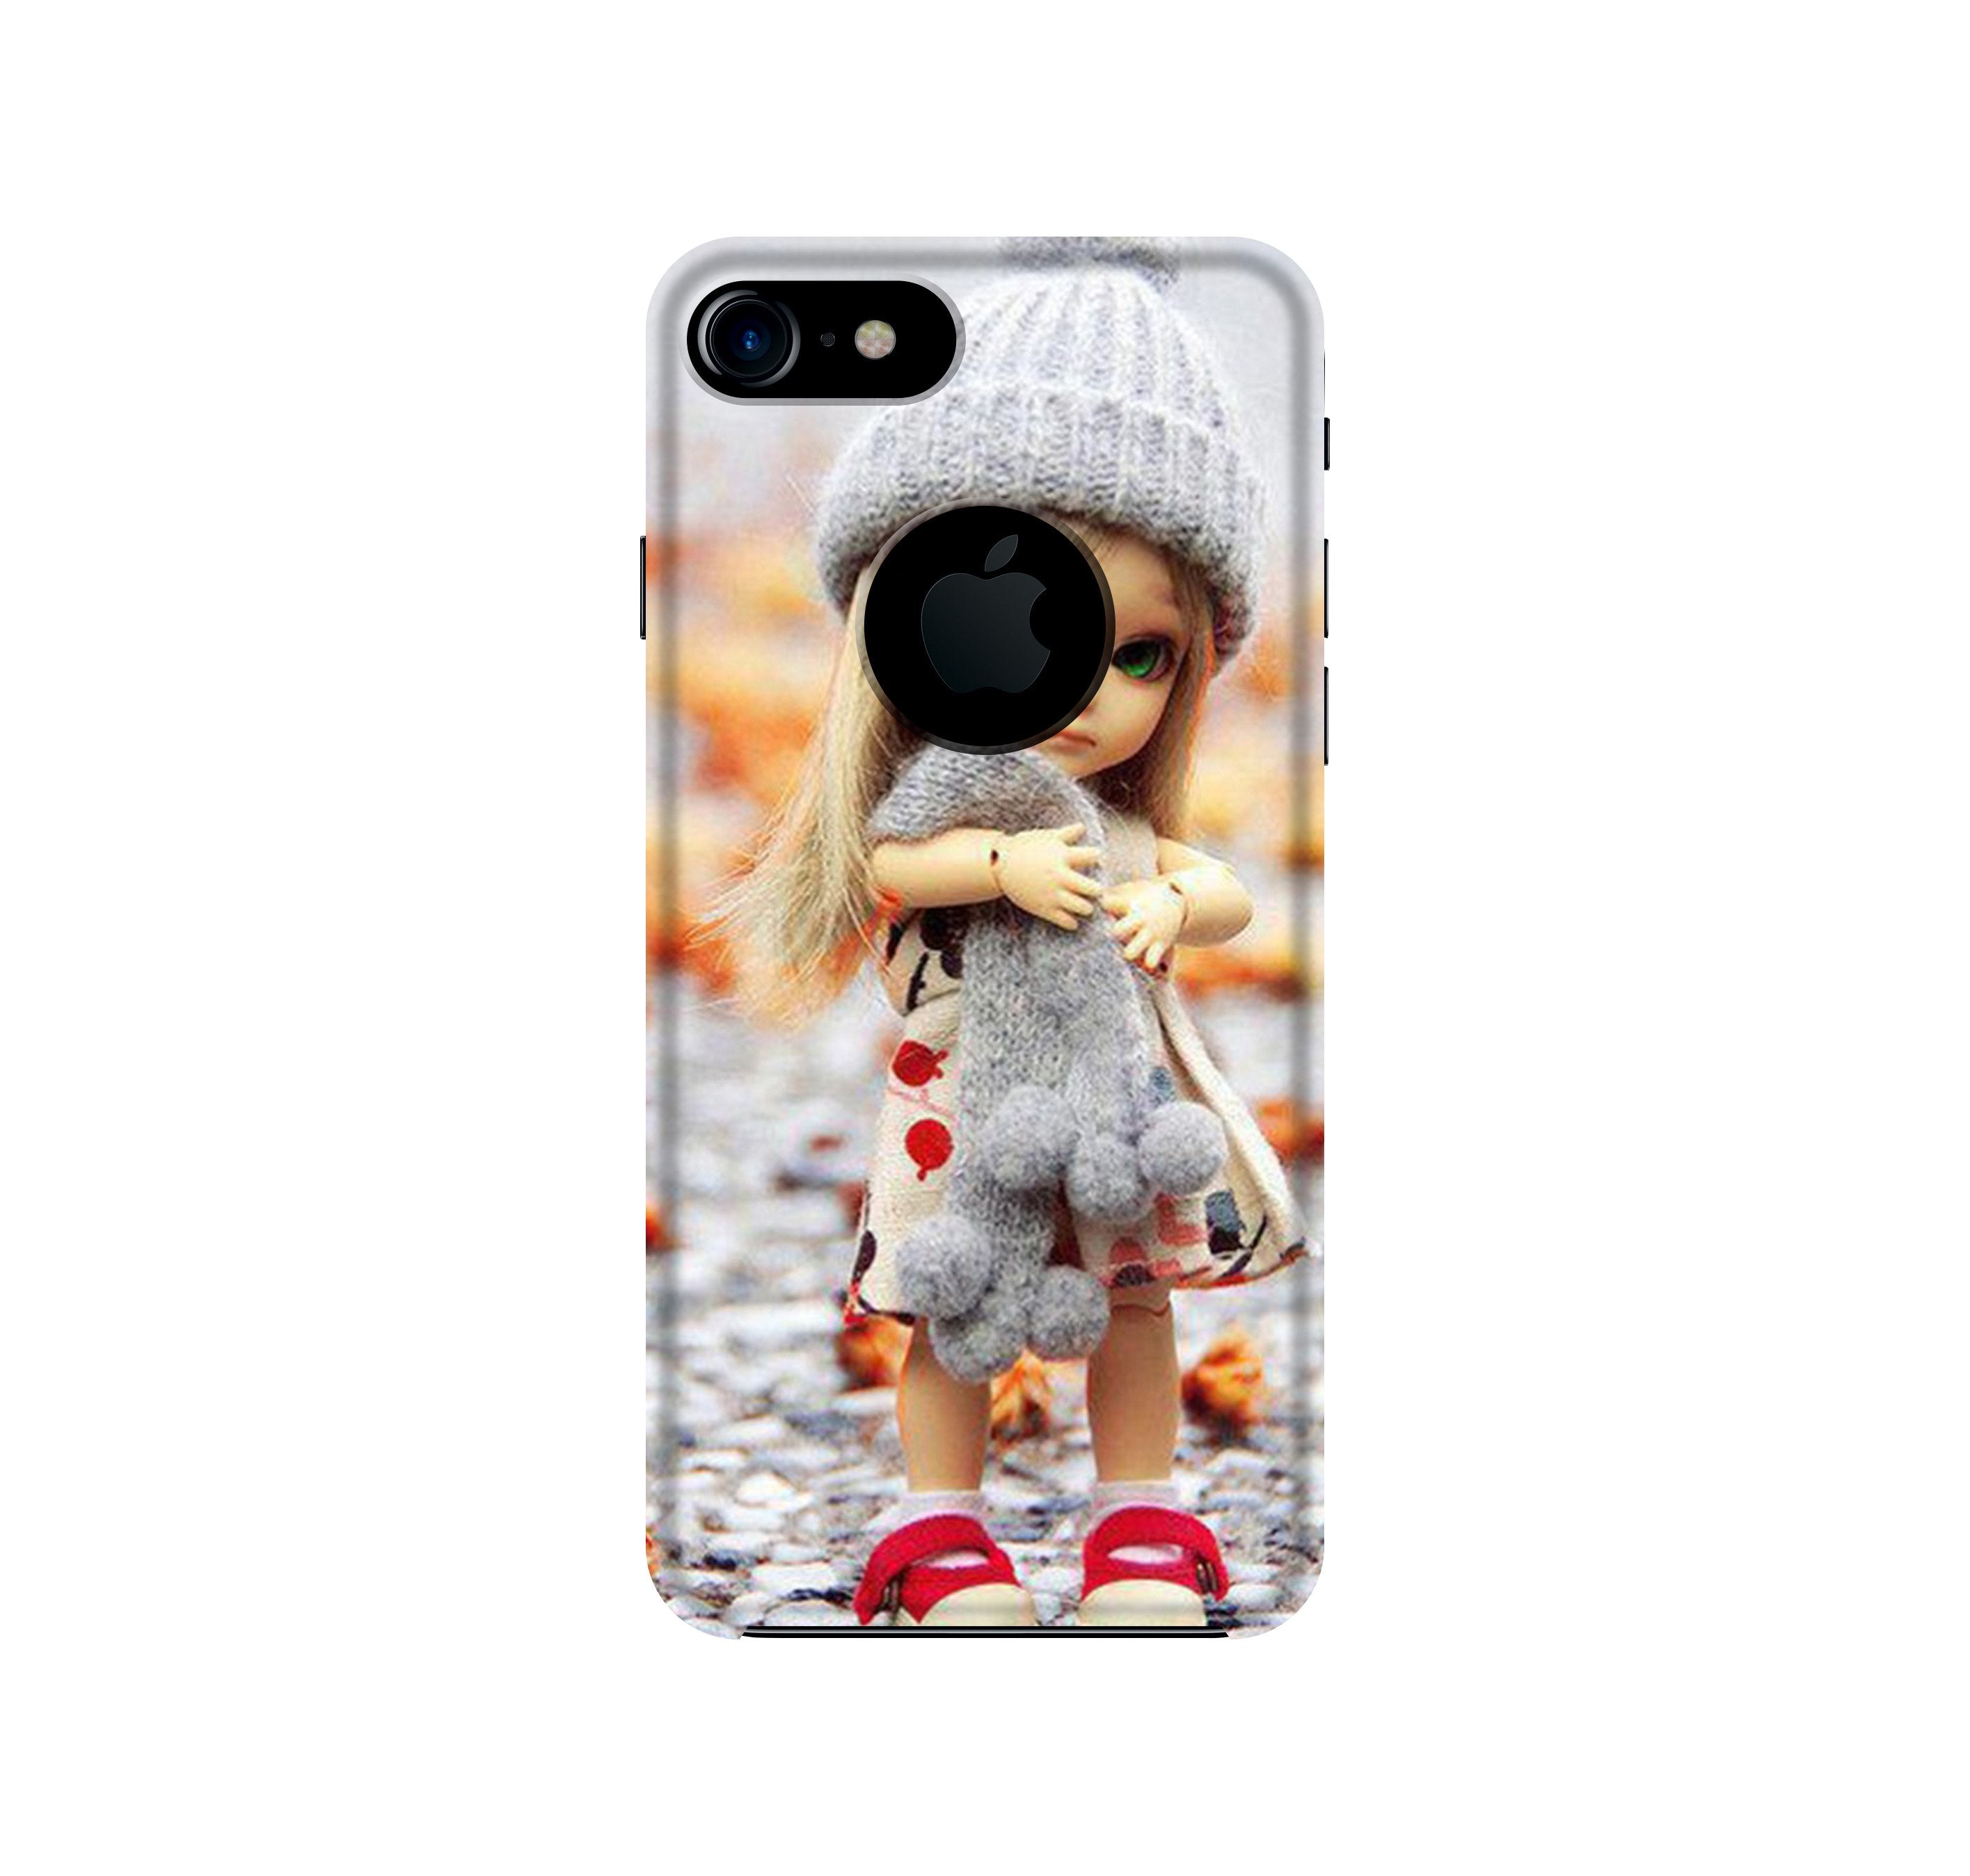 Cute Doll Case for iPhone 7 logo cut